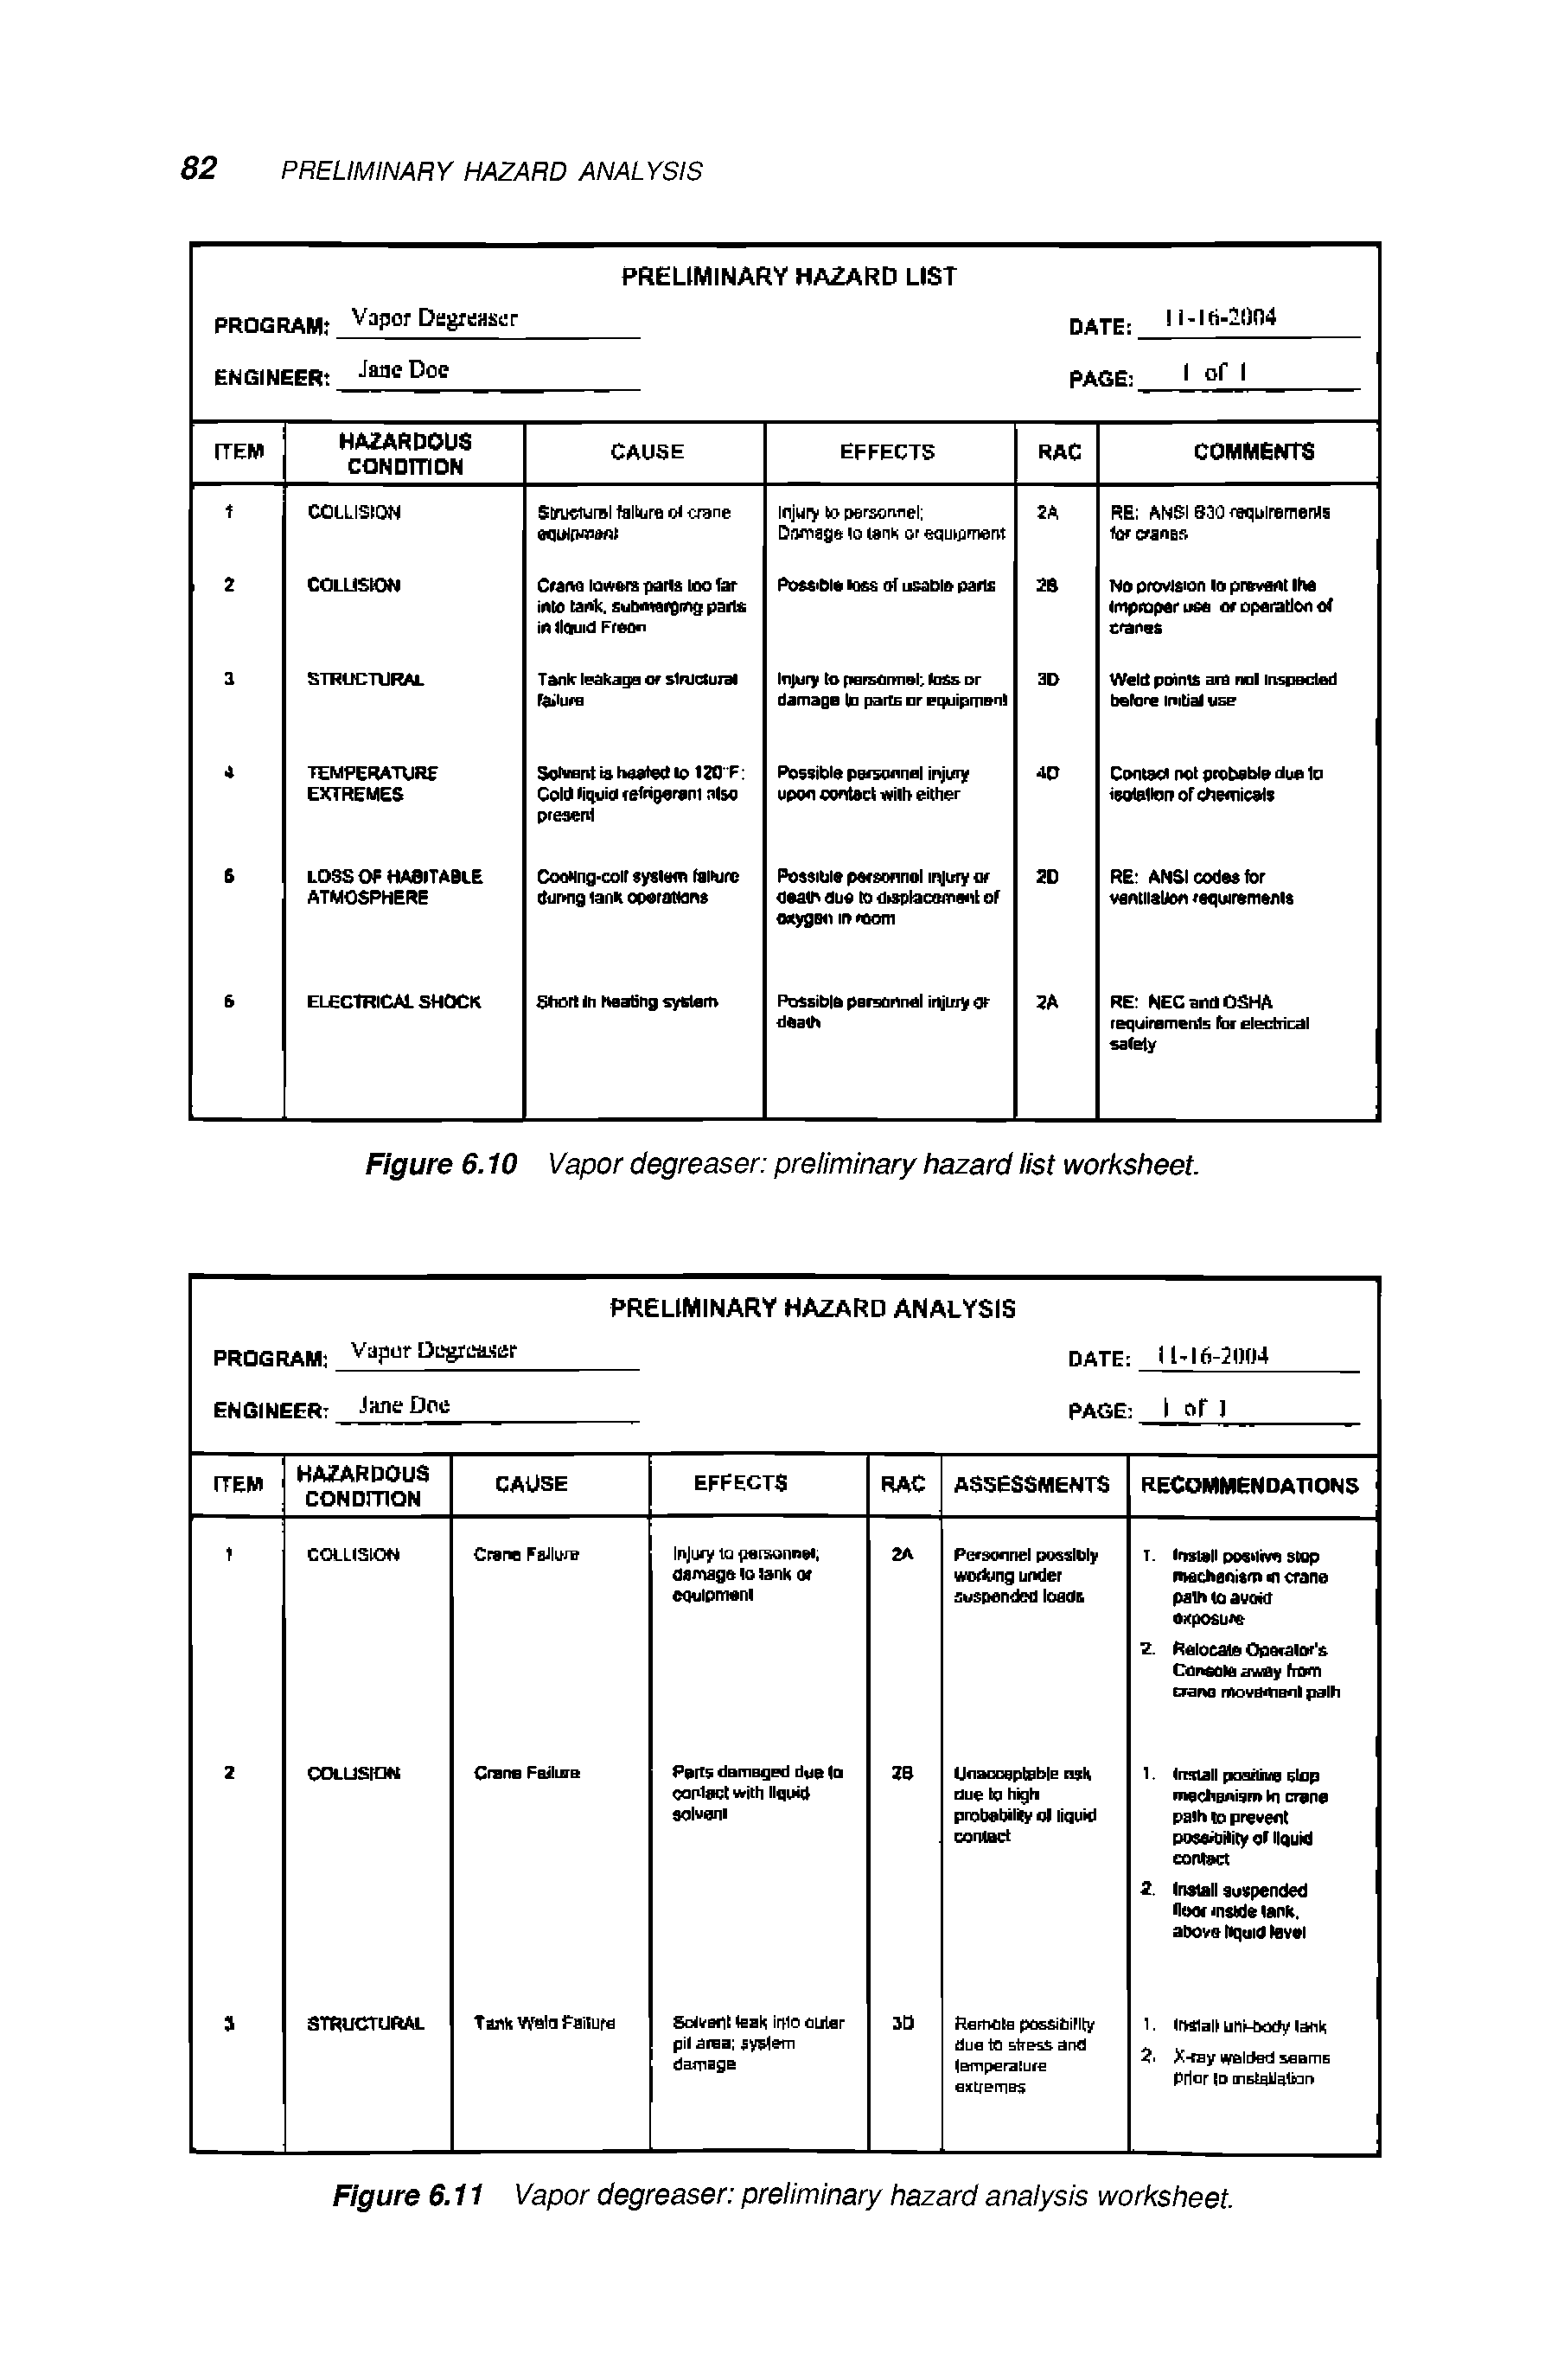 Figure 6.10 Vapor degreaser preliminary hazard list worksheet.